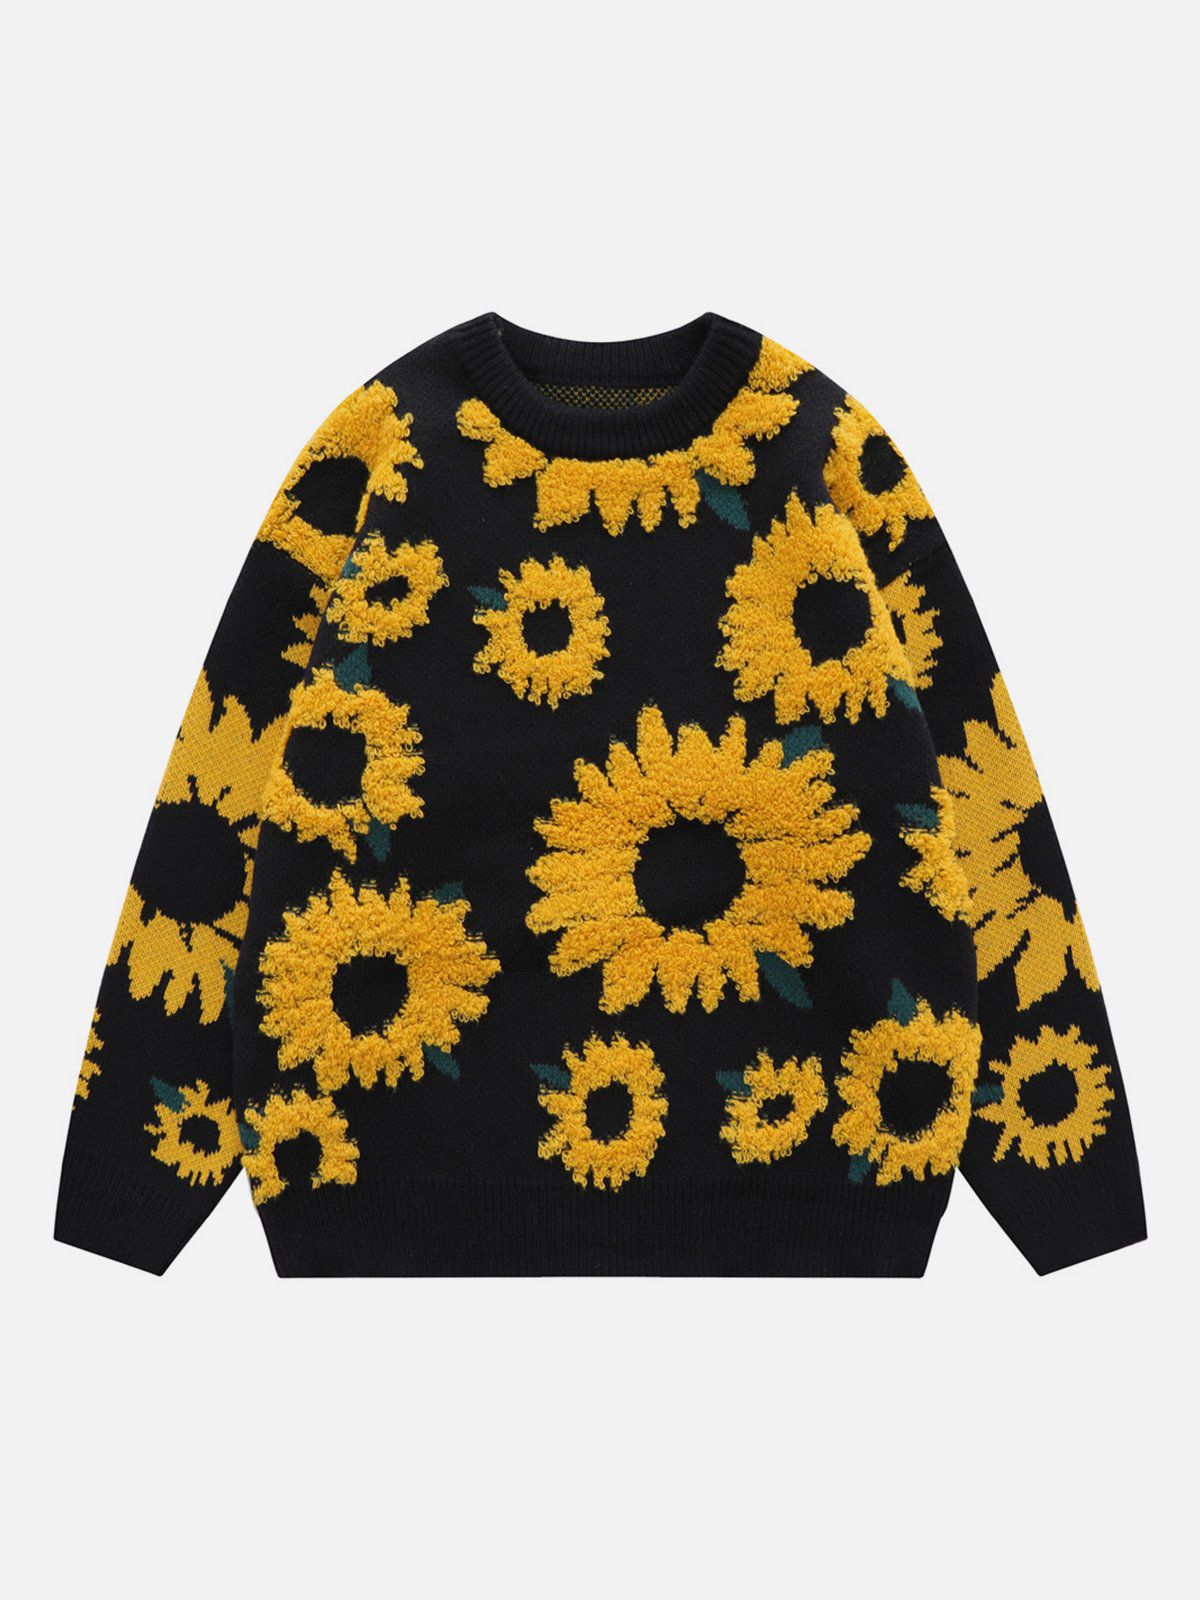 Aelfric Eden Sunflower Flocking Print Sweater @mouninaa